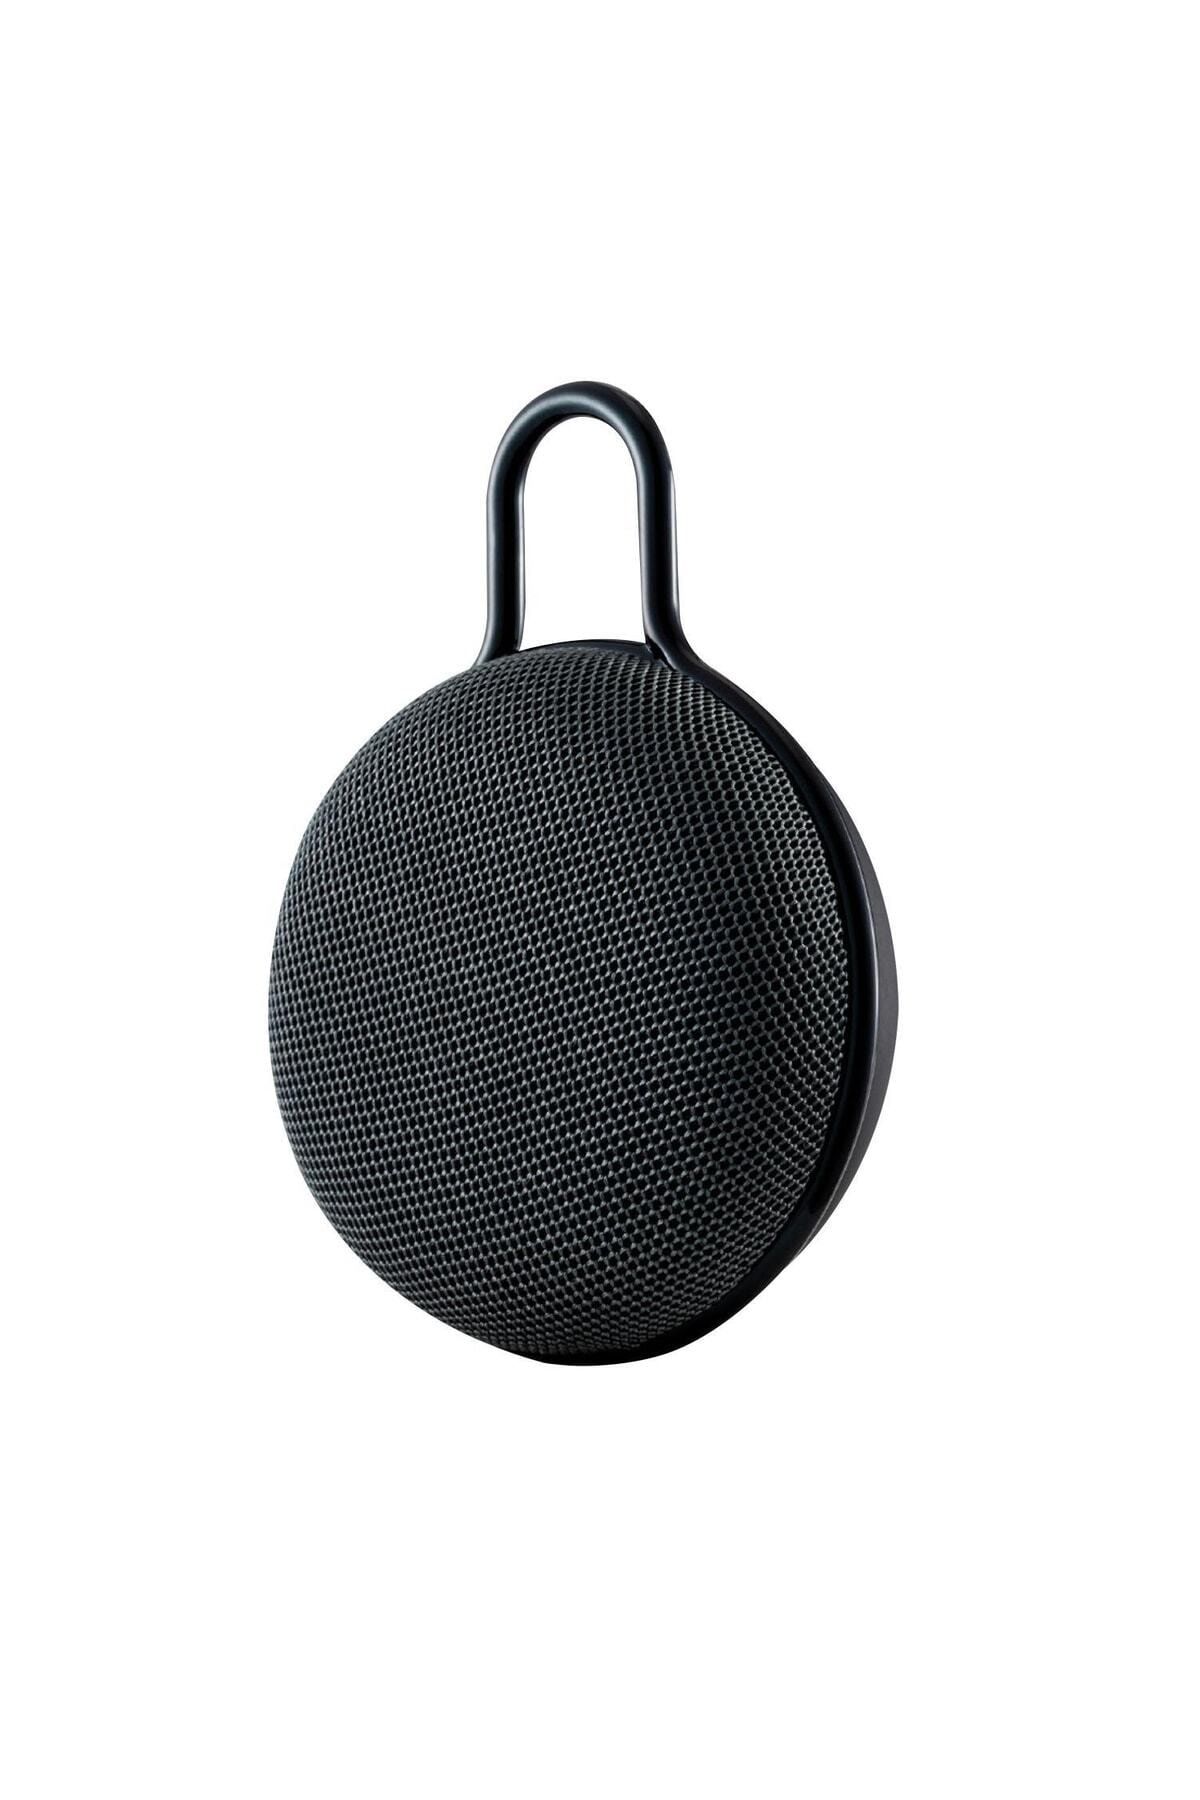 Polosmart Fs57 Taşınabilir Kablosuz Speaker Hoparlör Siyah